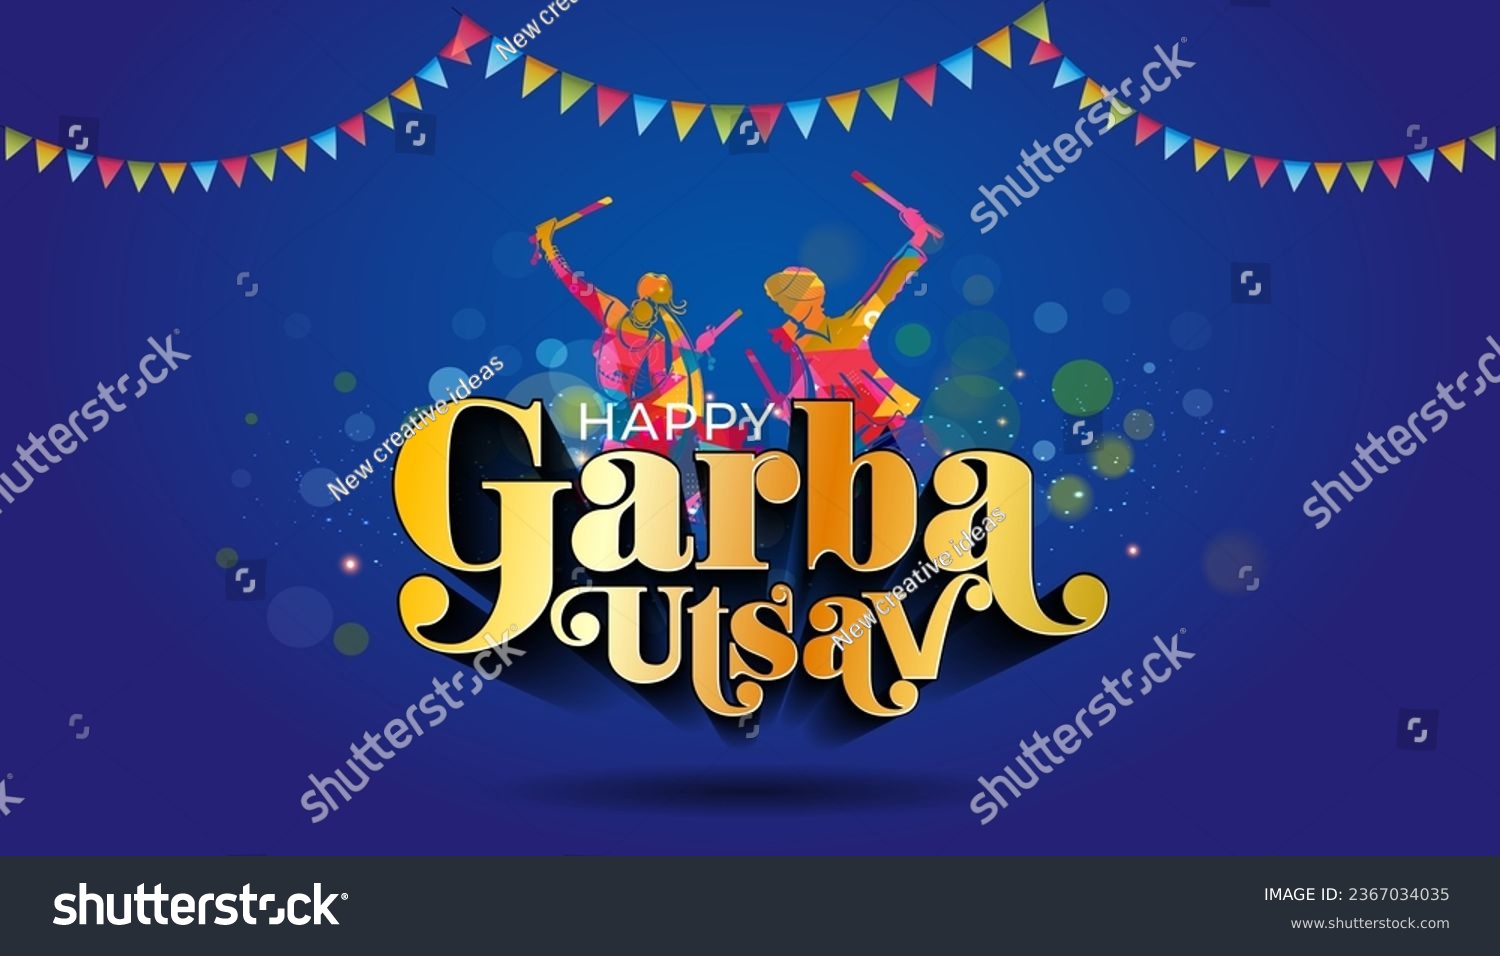 SVG of Happy Garba utsav or Dandiya dance. Indian traditional festival of Navratri Puja. 3d Typography with dandiya dancer on blue night background. svg